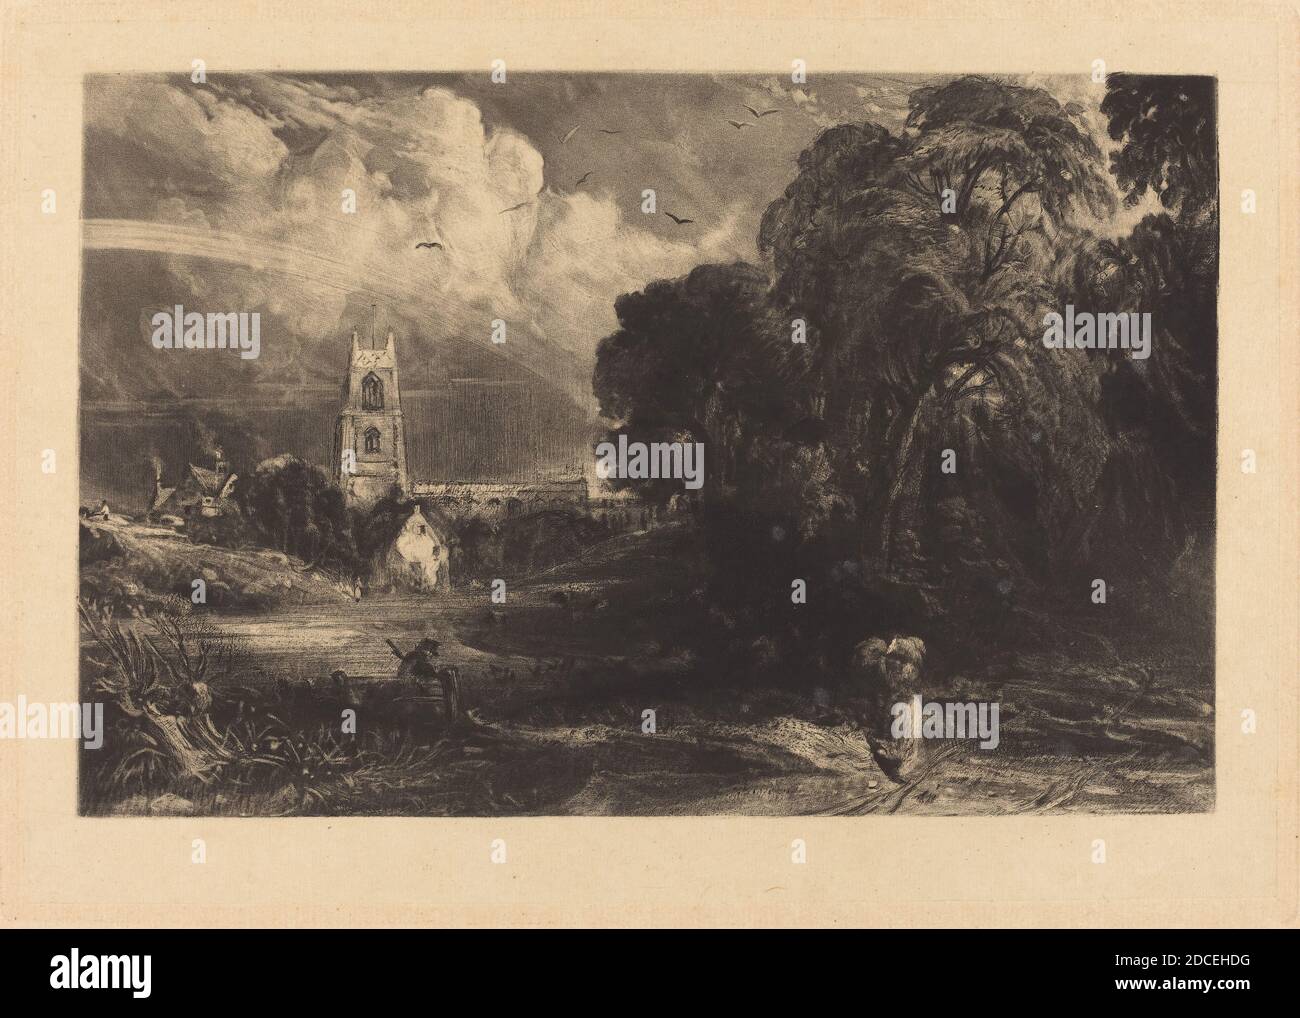 David Lucas, (artista), British, 1802 - 1881, John Constable, (artista dopo), British, 1776 - 1837, Stoke-by-Neyland, in o dopo 1829, mezzotint Foto Stock